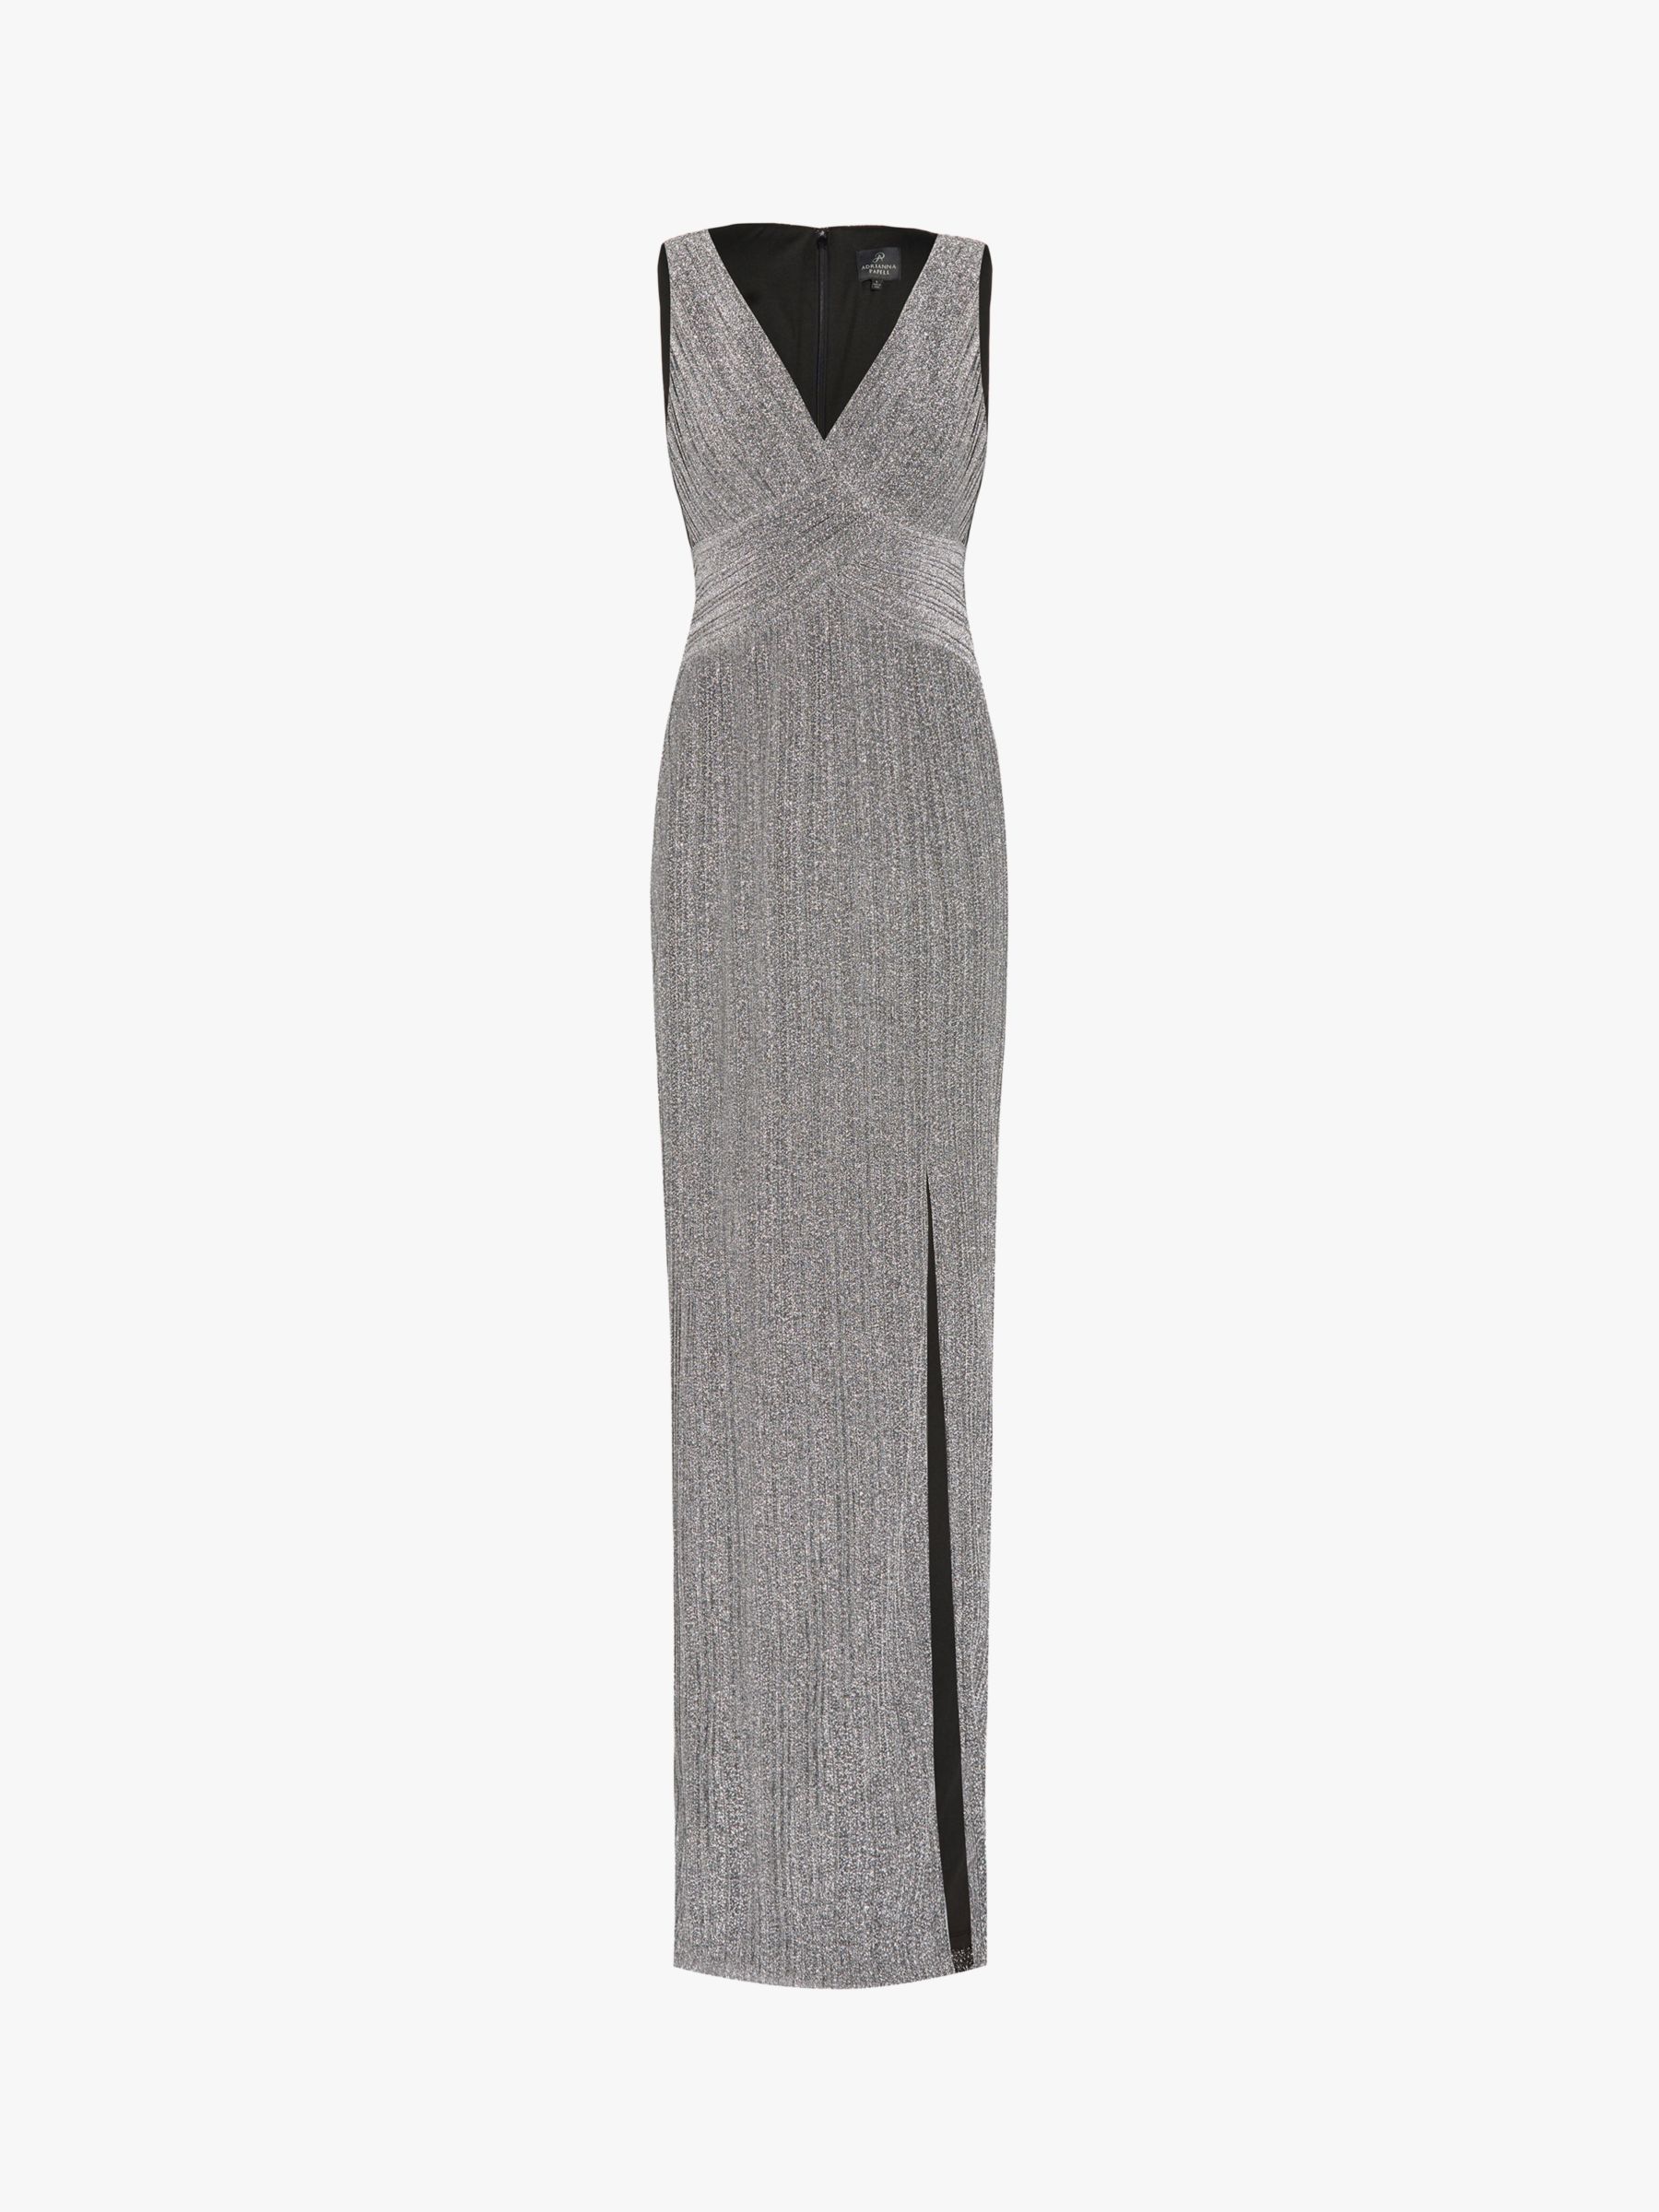 Adrianna Papell Metallic Knit Dress, Dark Silver at John Lewis & Partners